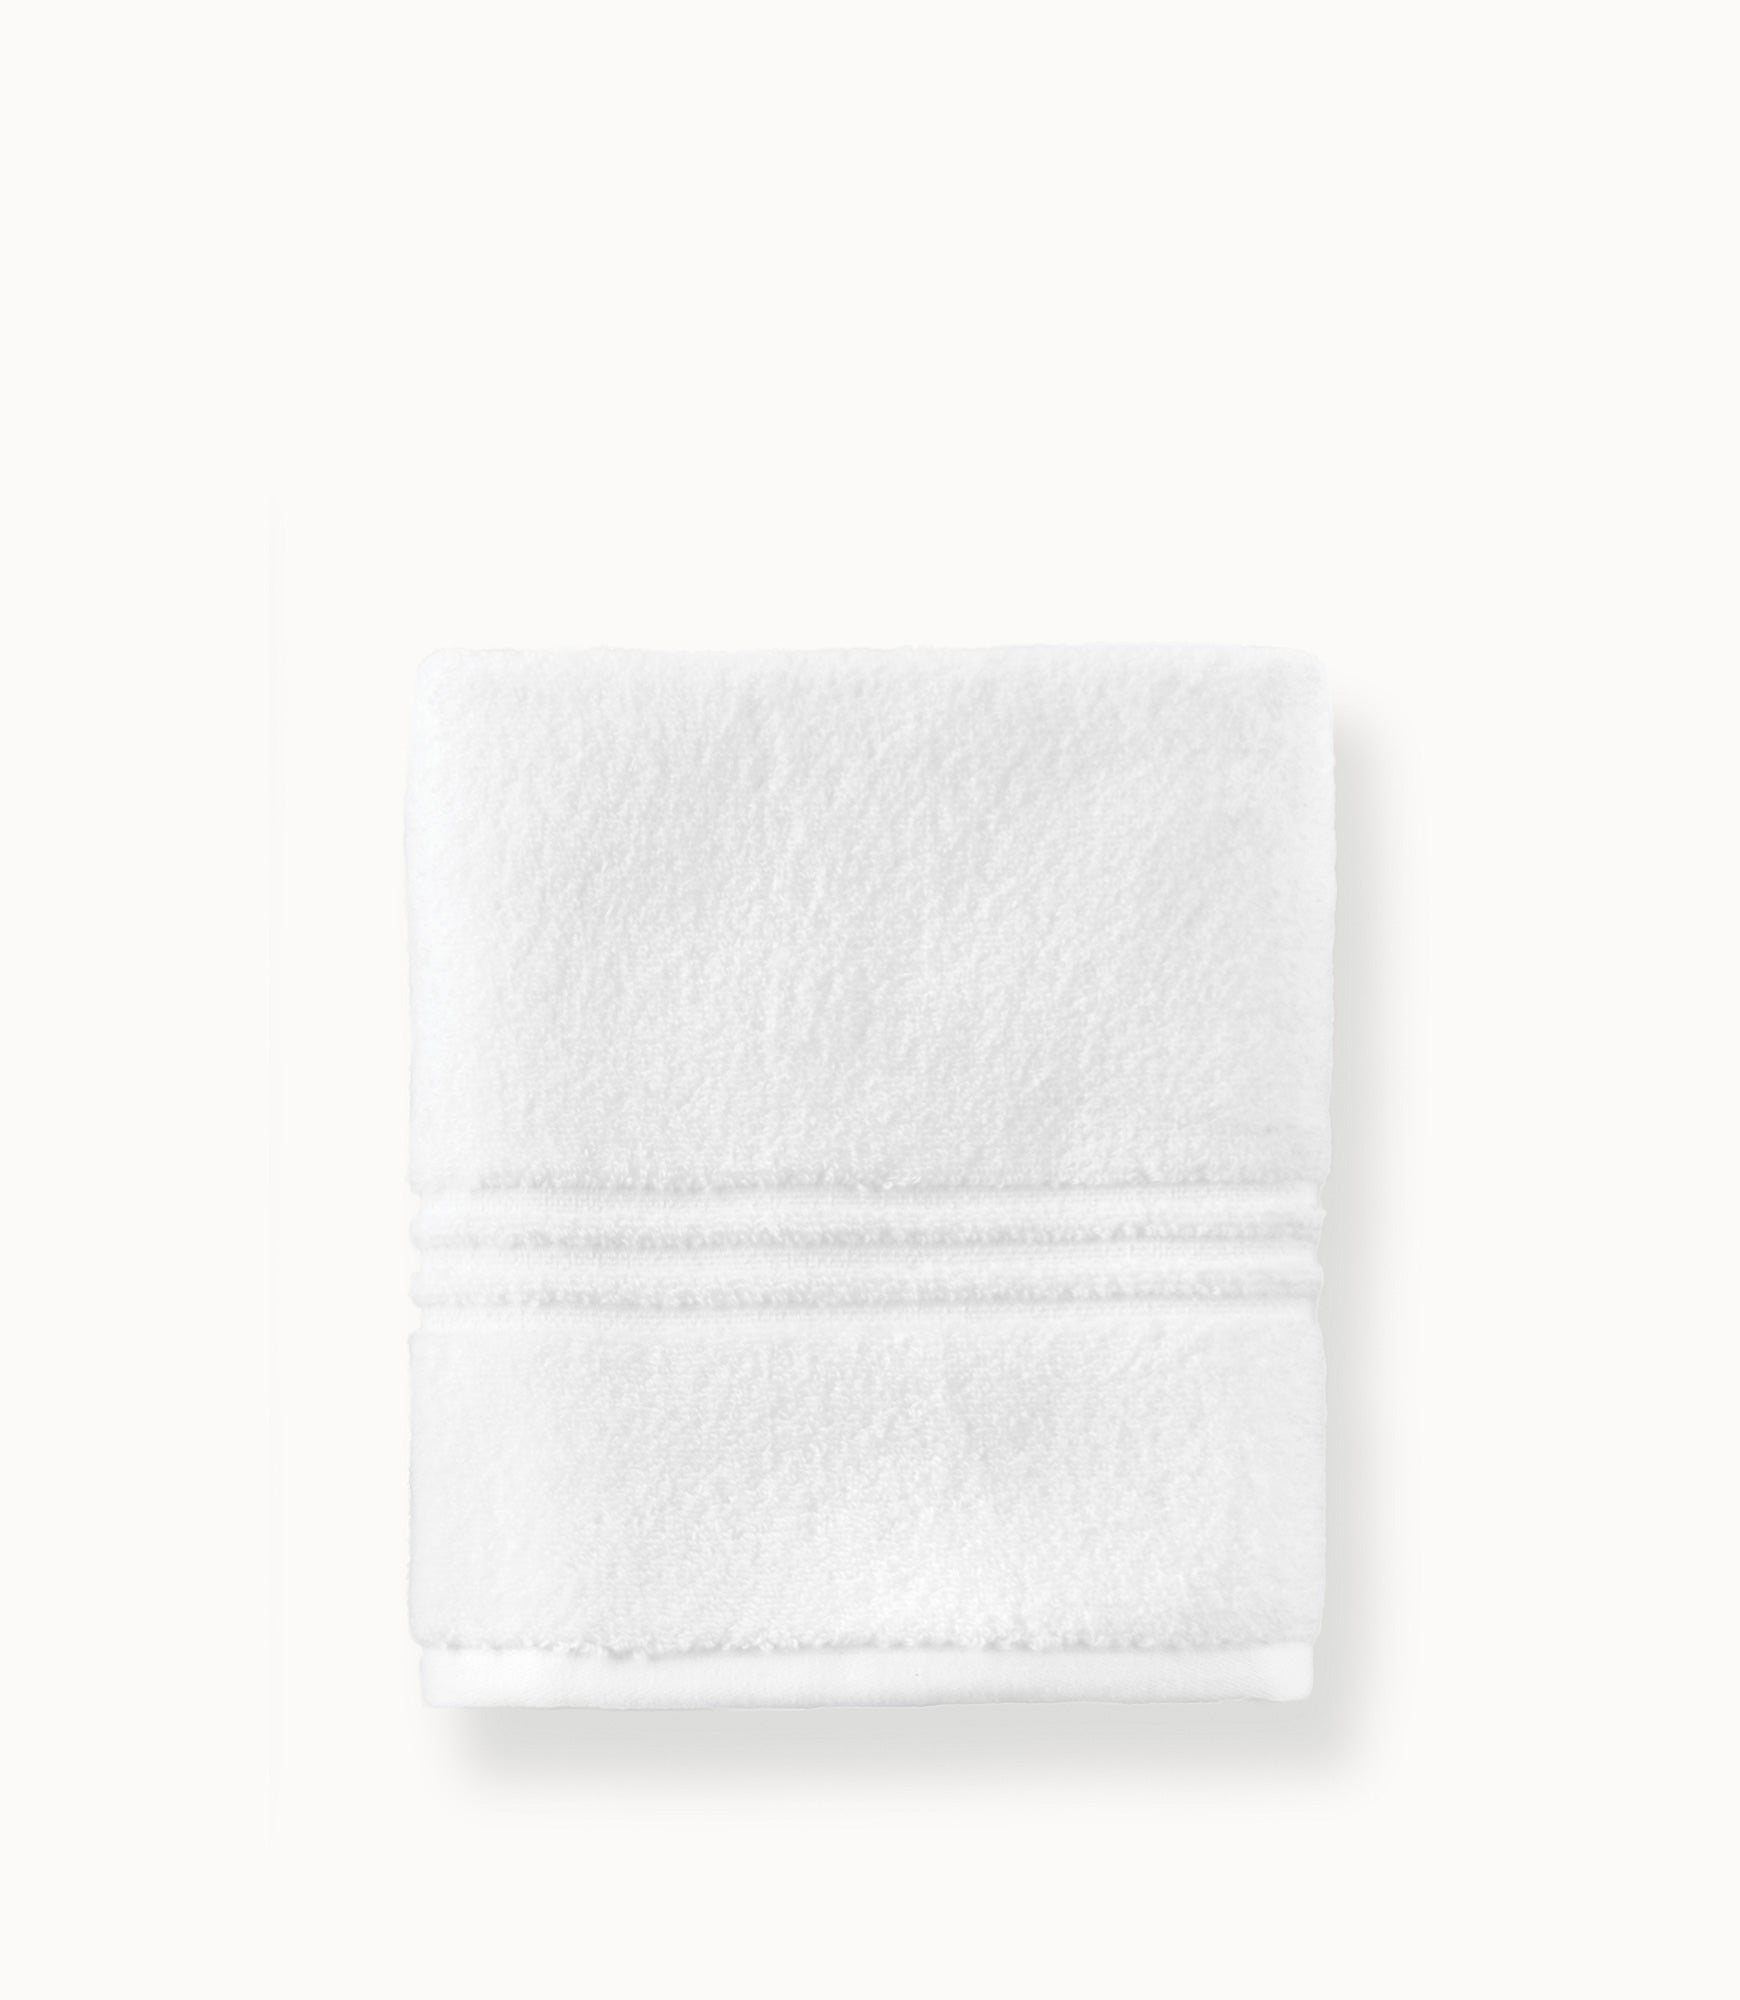 Peacock Alley Jubilee Hand Towel - White